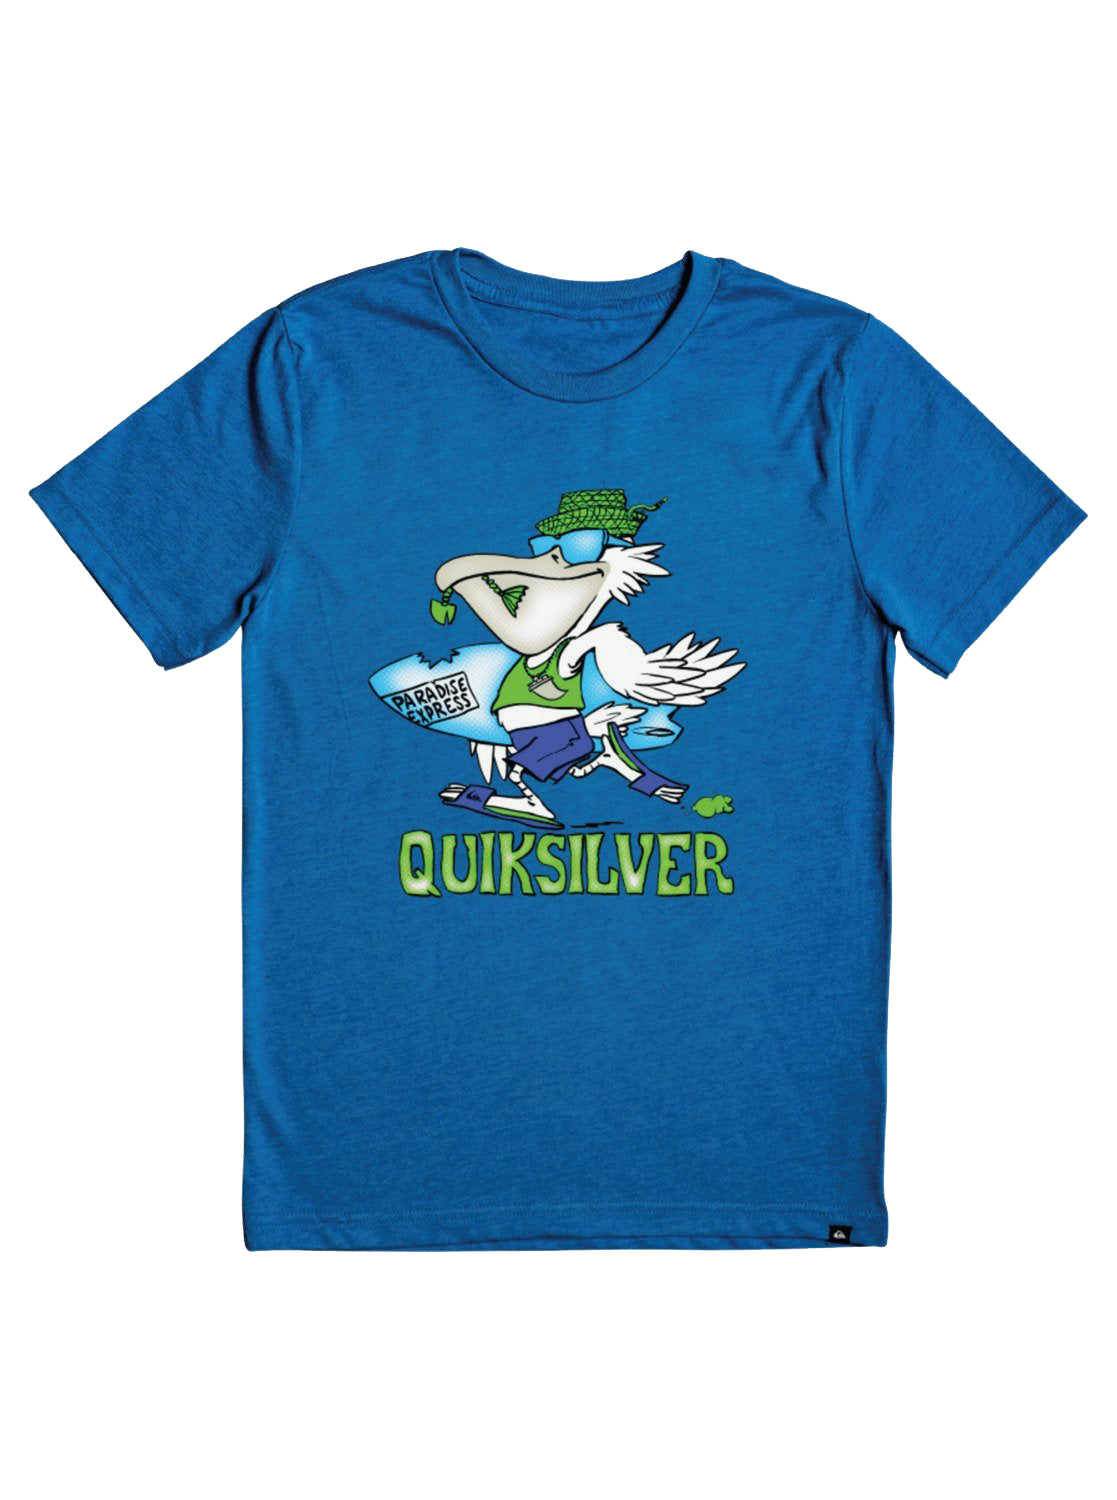 Quiksilver Kids Pelican Shred SS Tee BQVH 7X